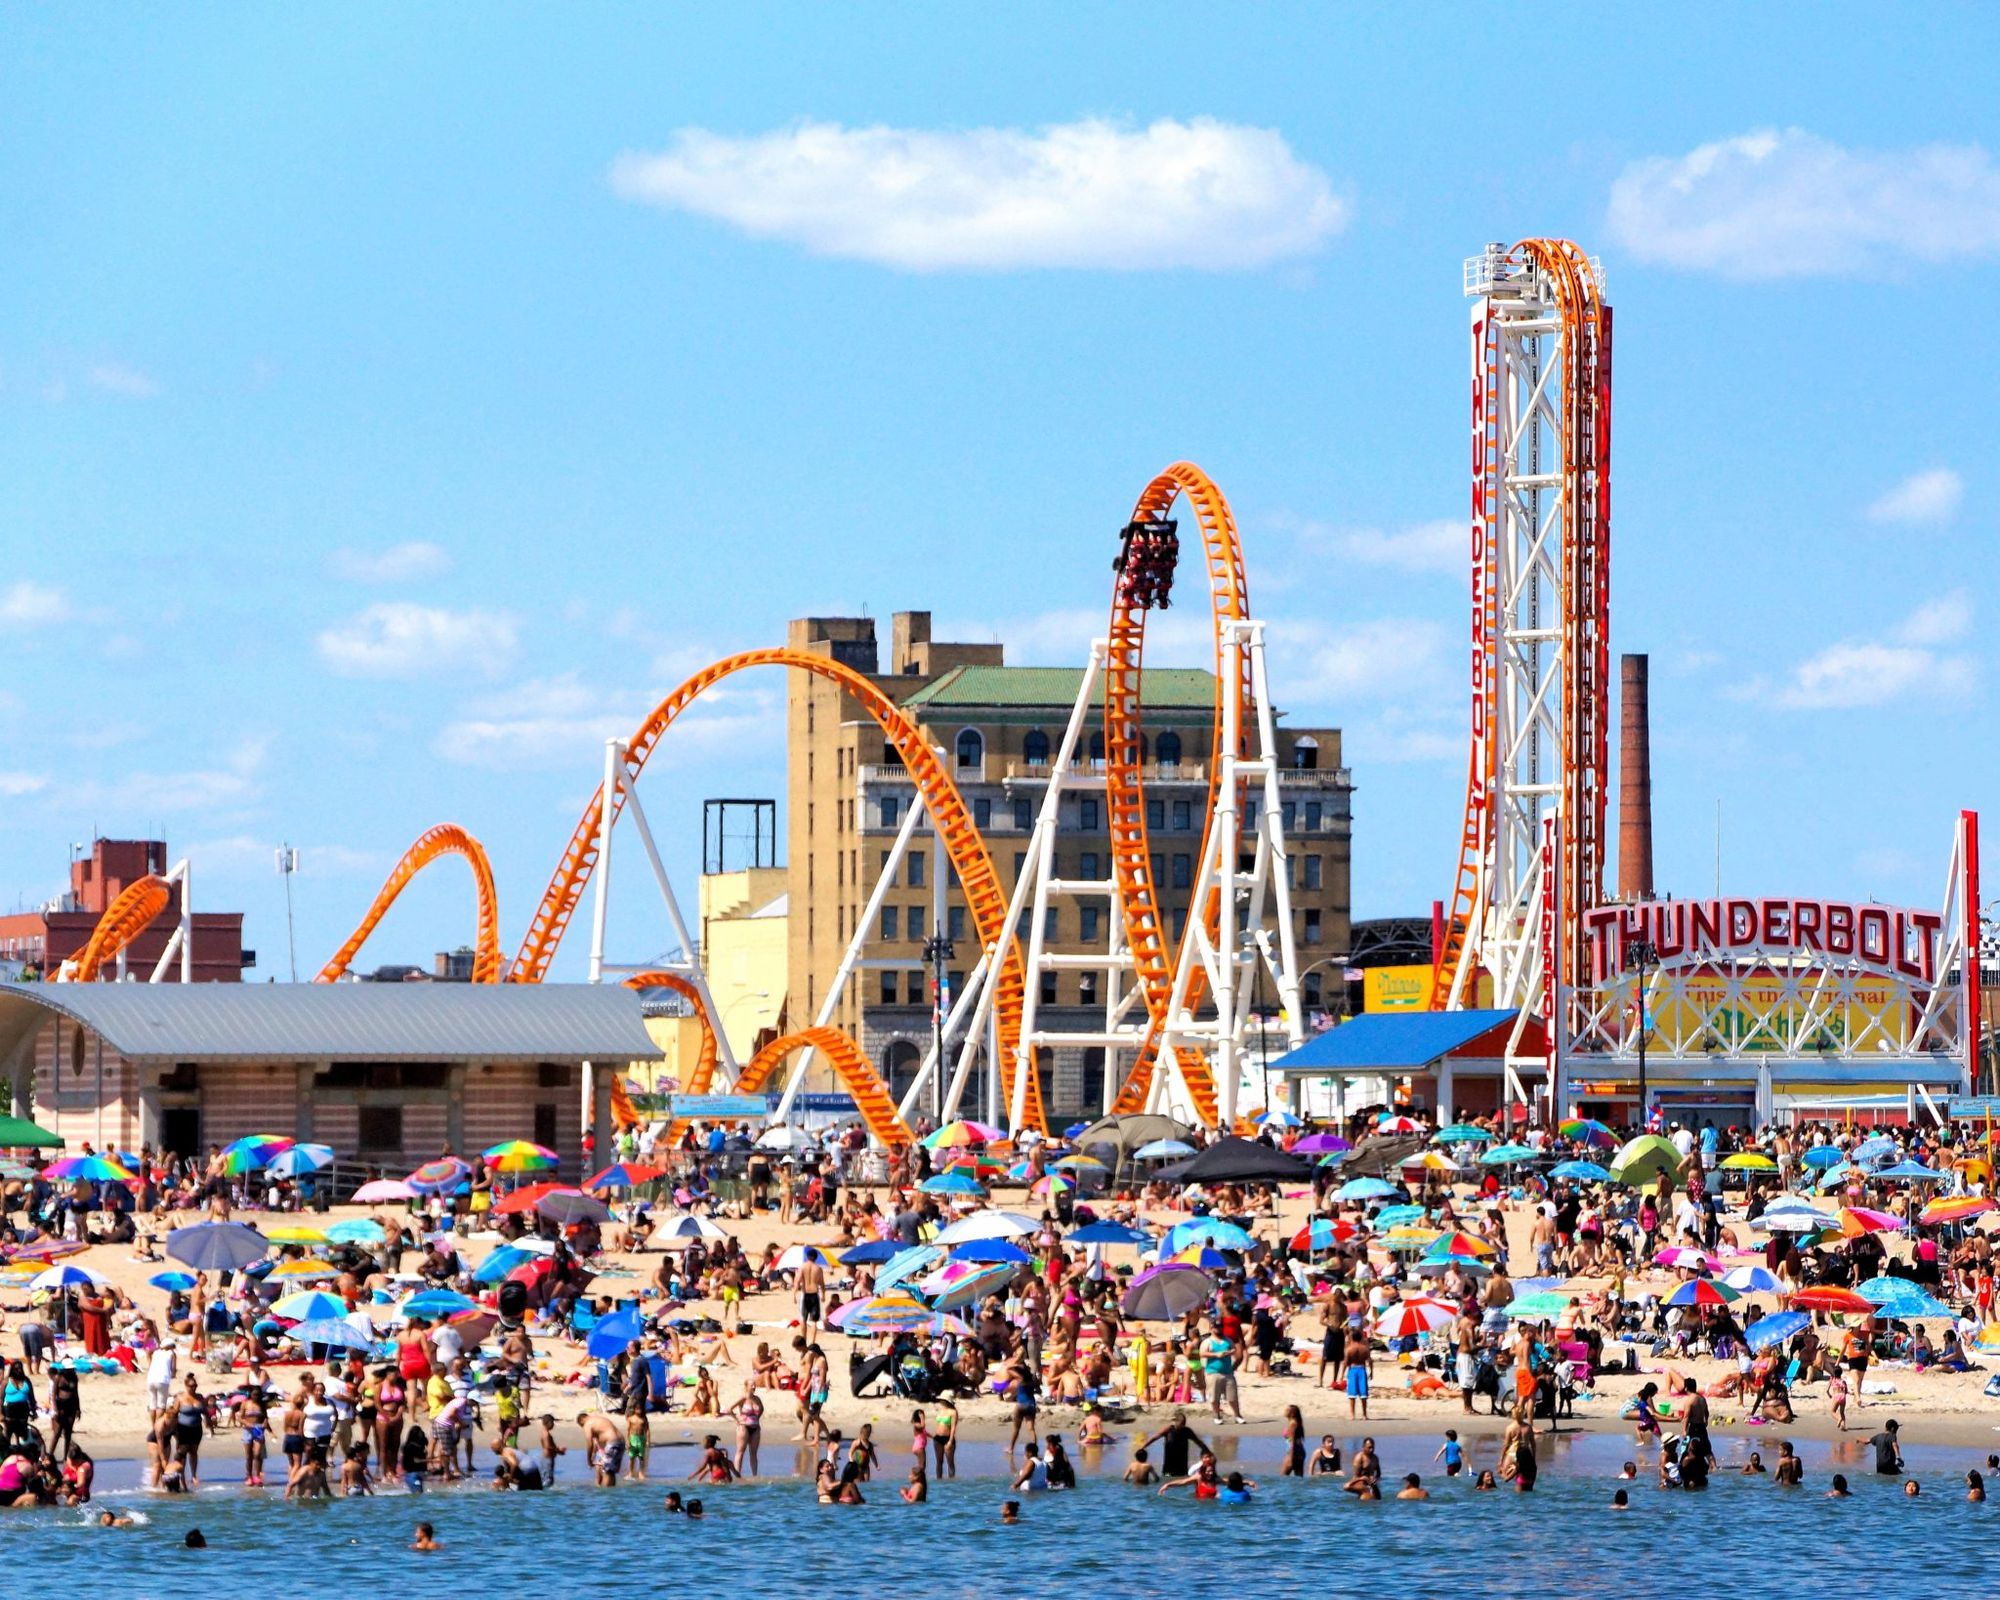 Come One, Come All! Coney Island Opens For The Season on Saturday